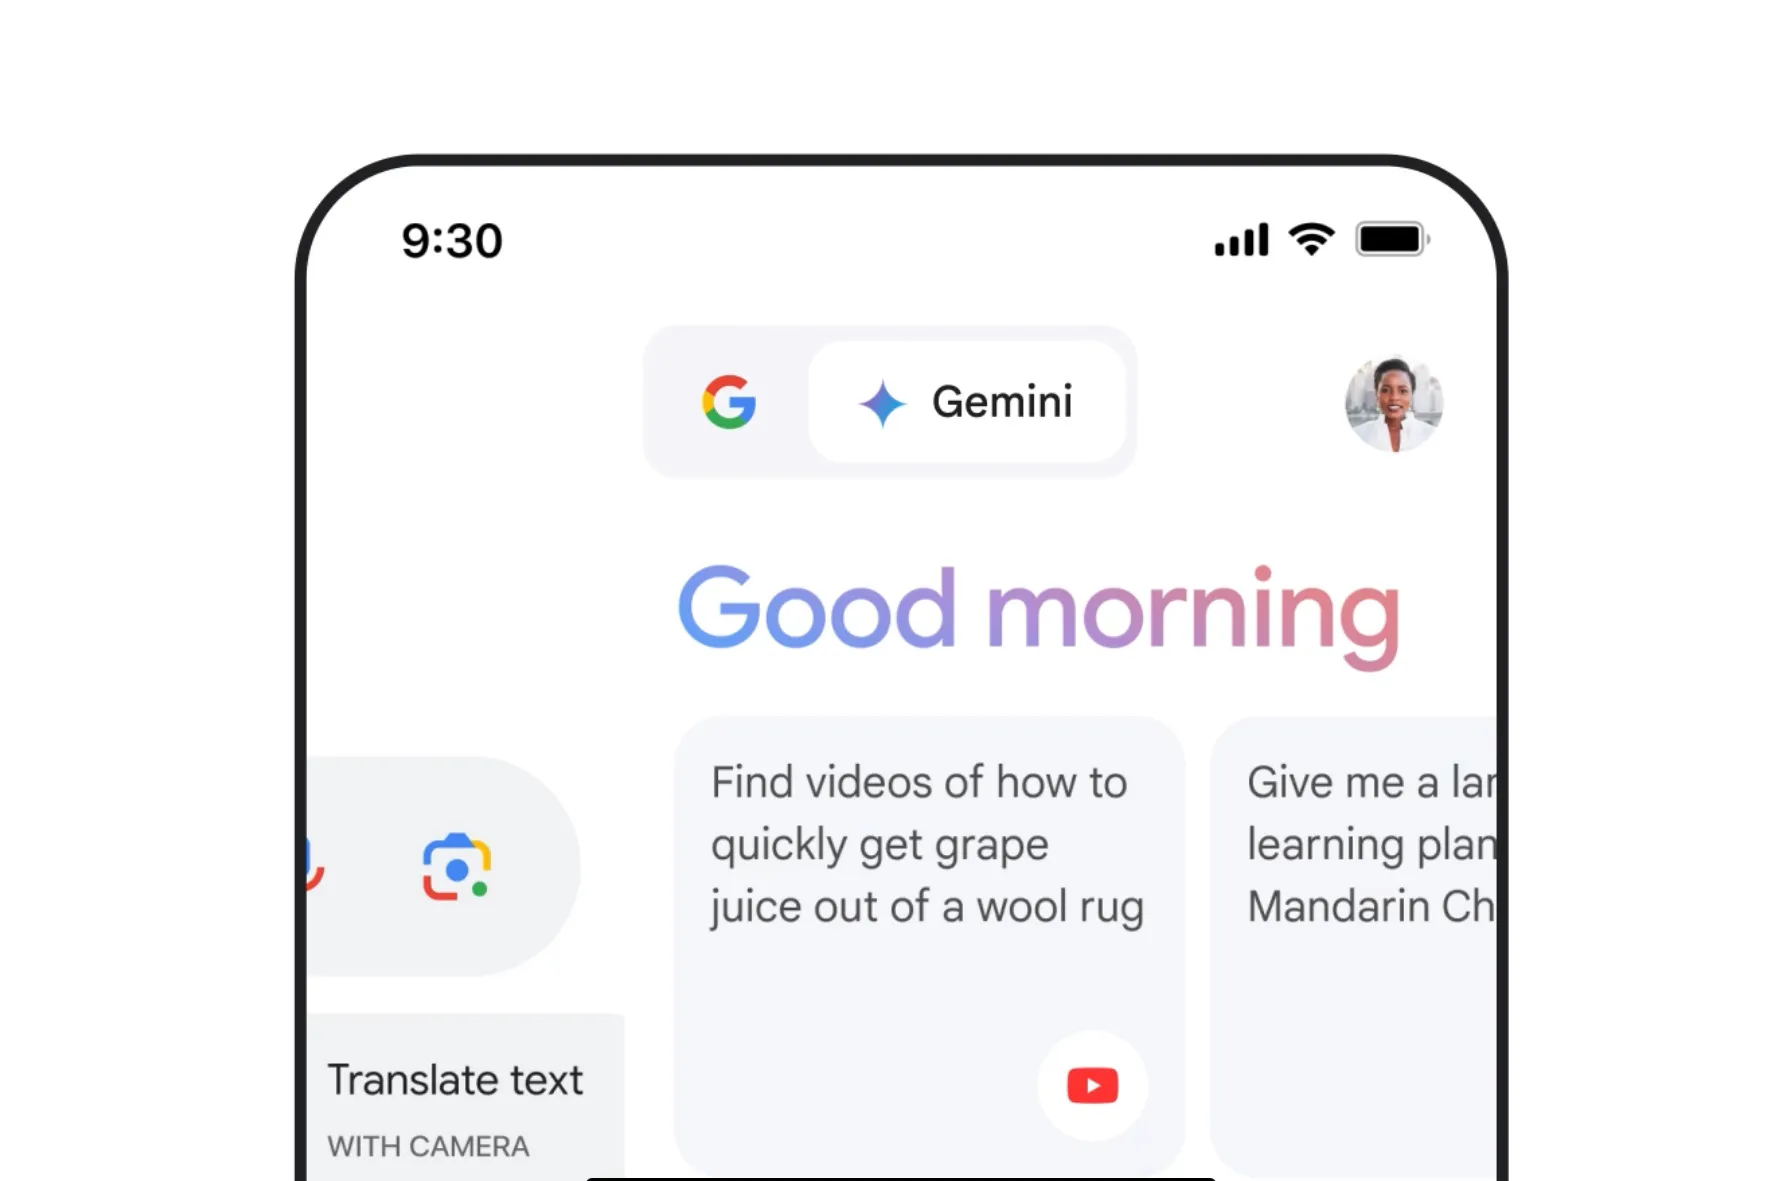 Running Google Gemini experience on iOS.